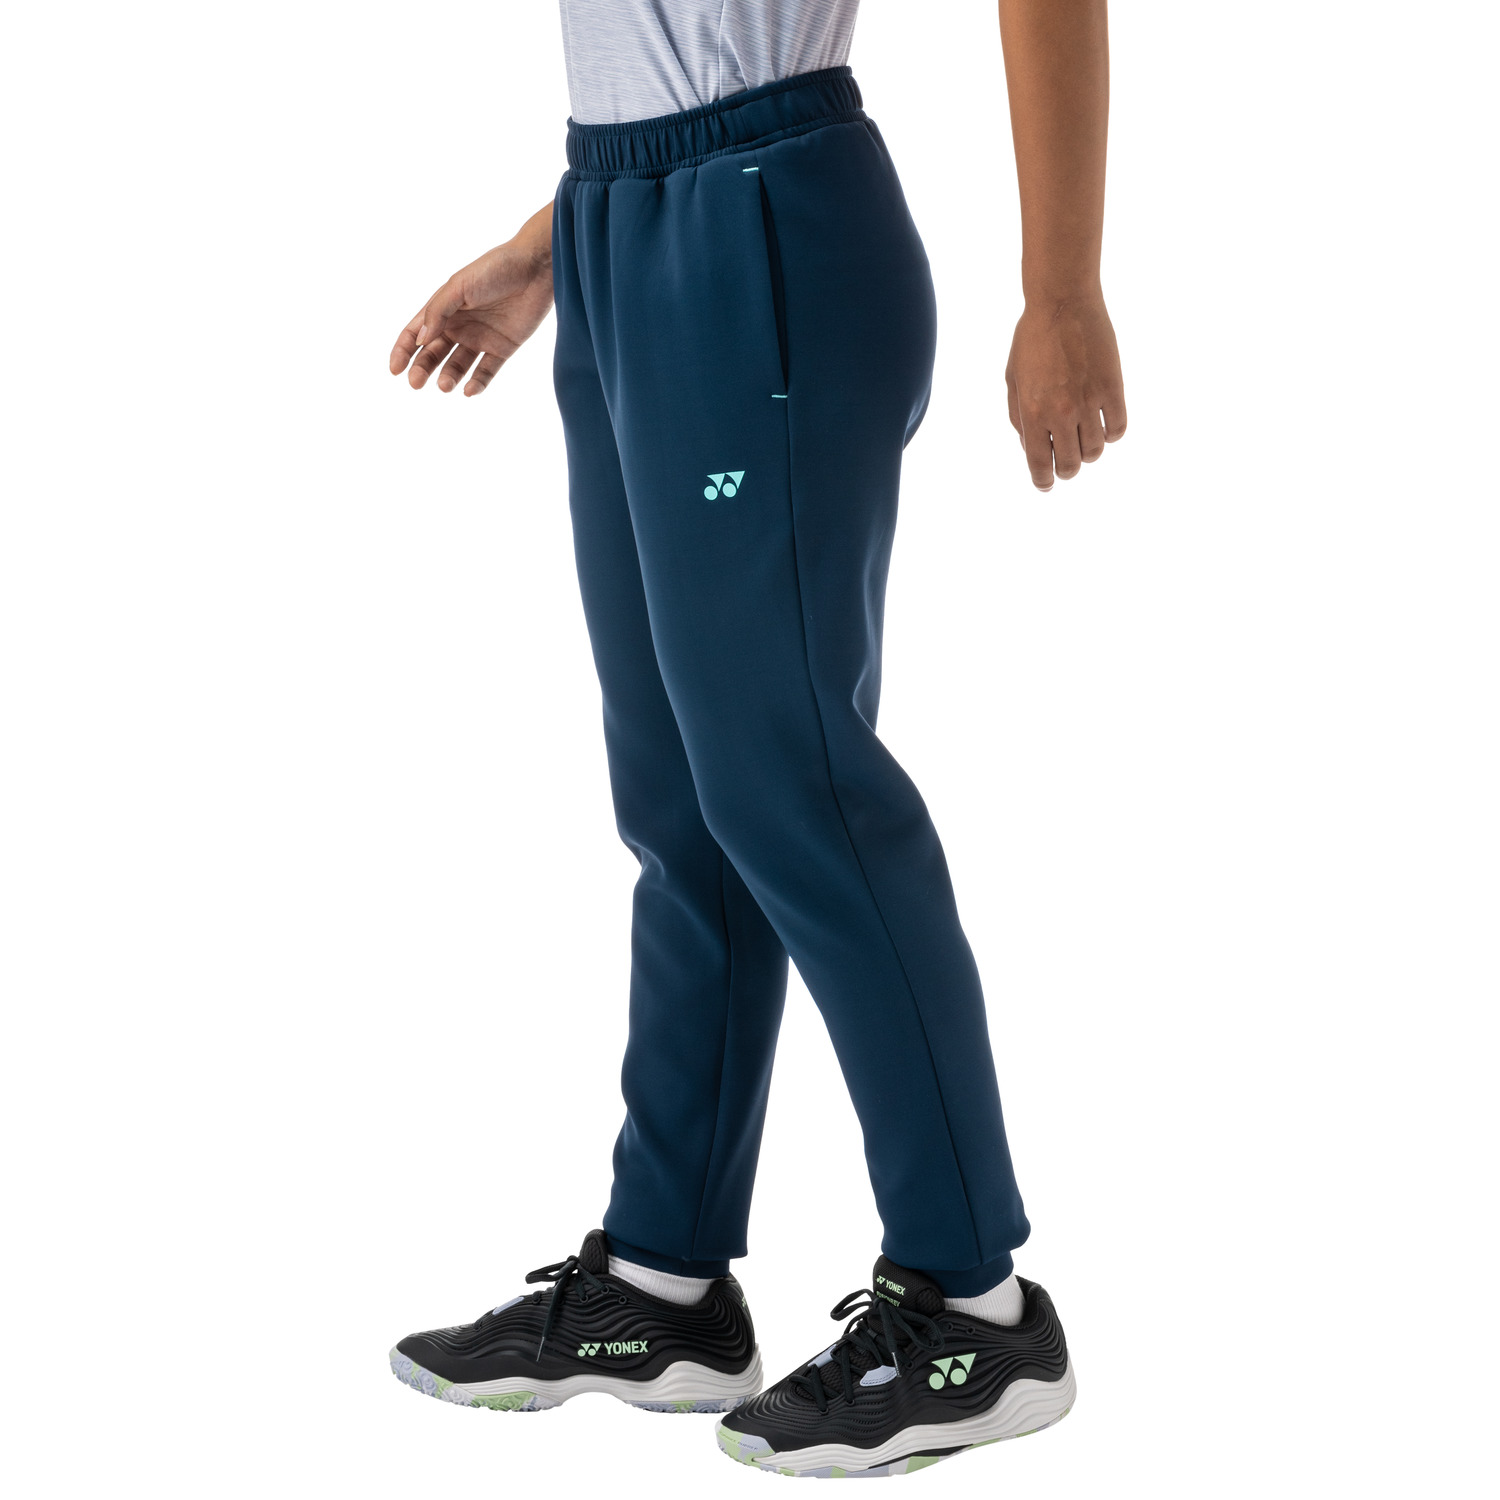 Men's trousers Yonex Warm-Up Pants - navy blue | Tennis Zone | Tennis Shop